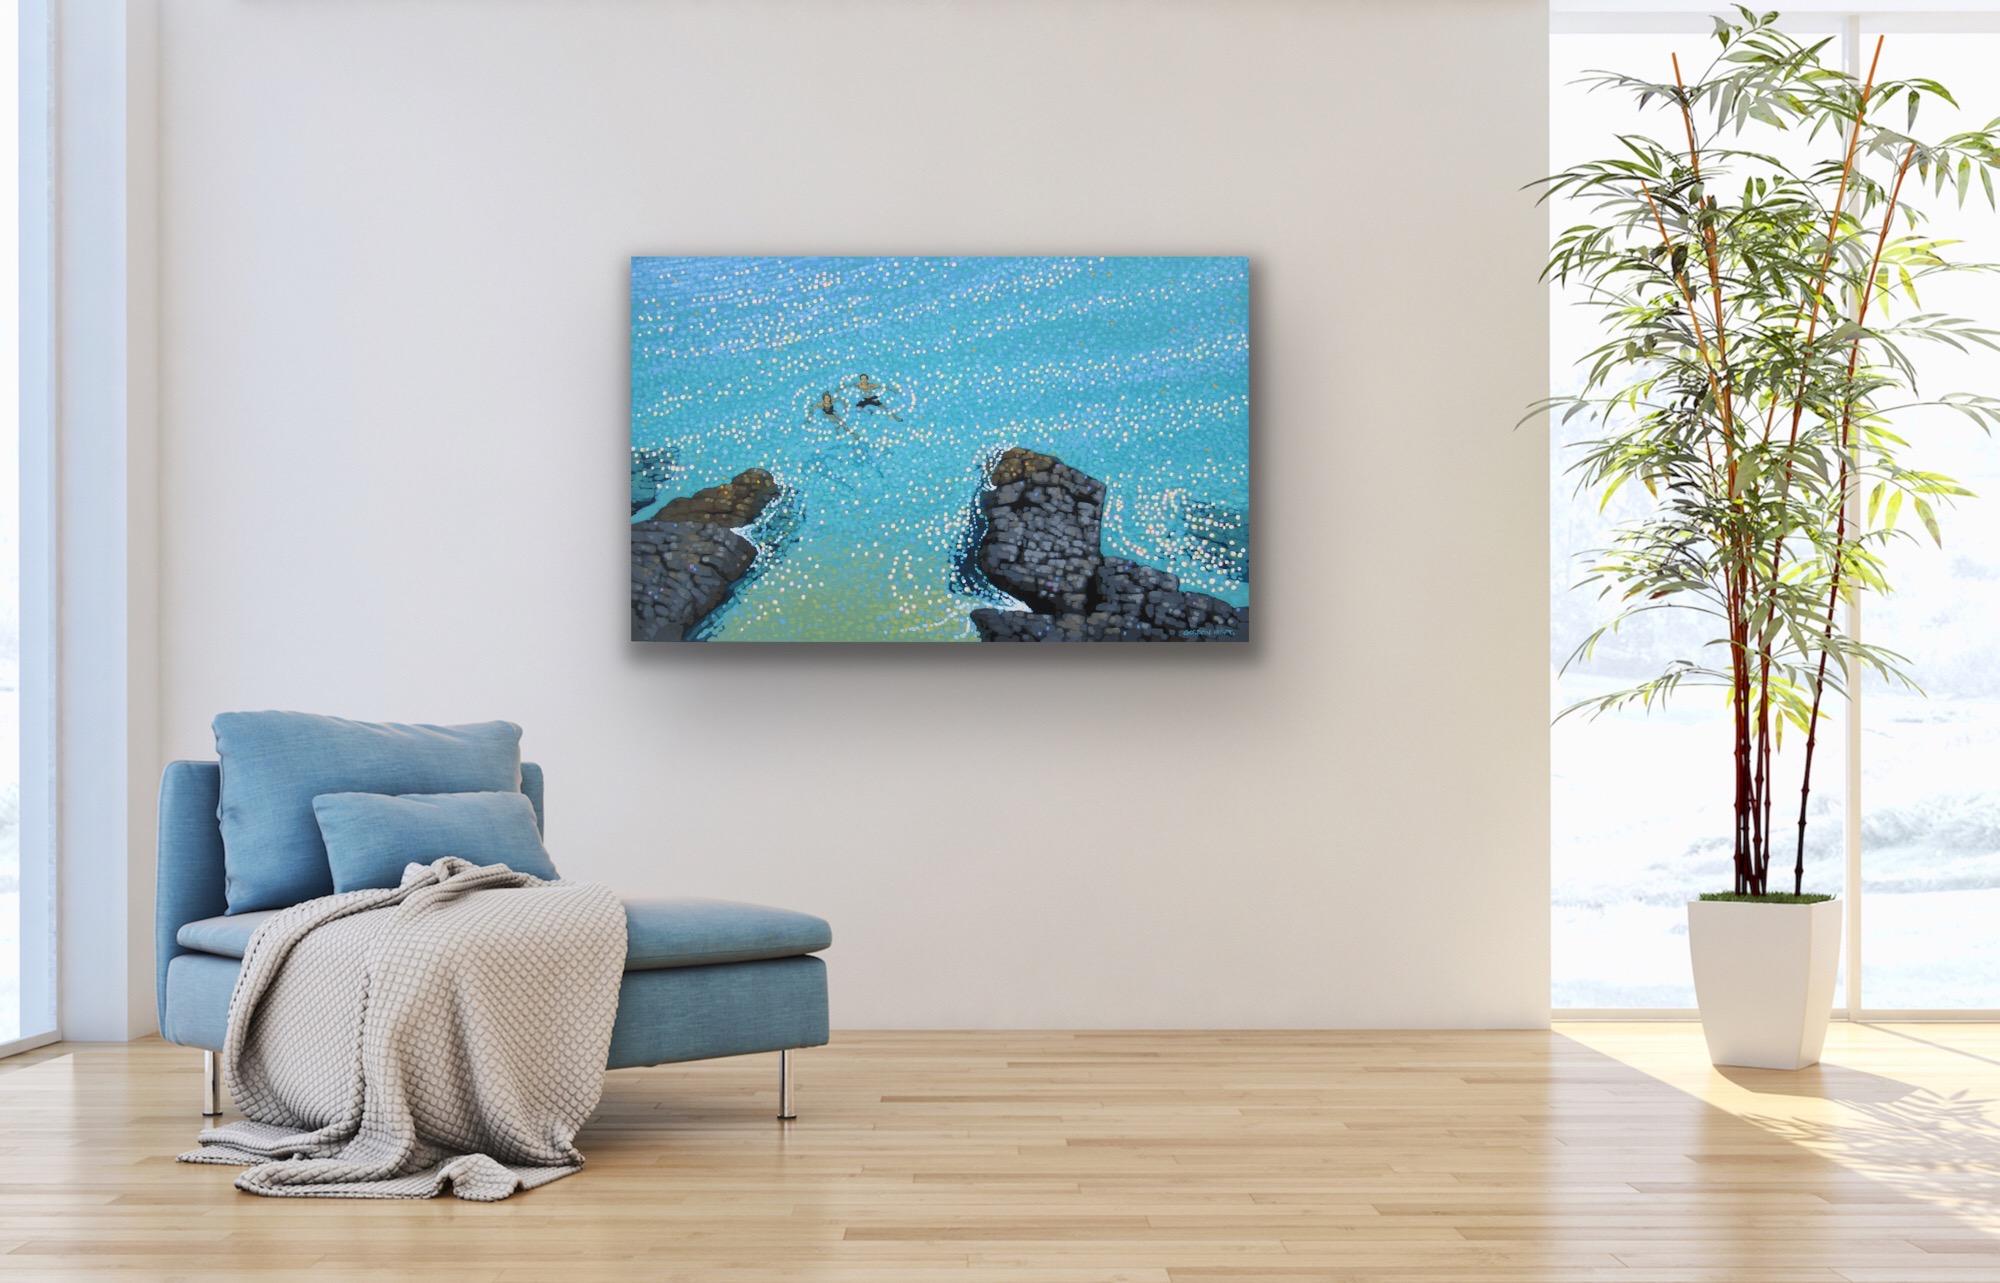 Aquarelle turquoise et scintillante - Come On In, The Water's Lovely, Cornish Seascape - Painting de Gordon Hunt